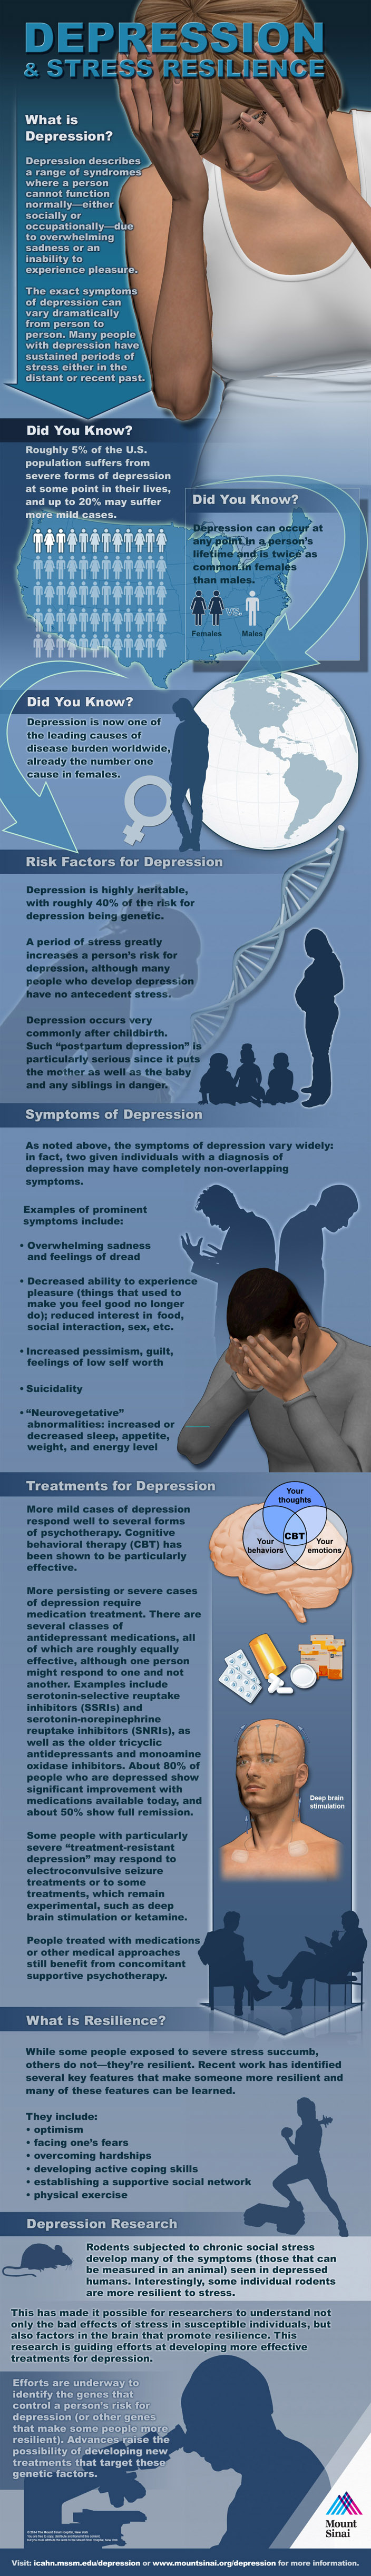 Depression infographic